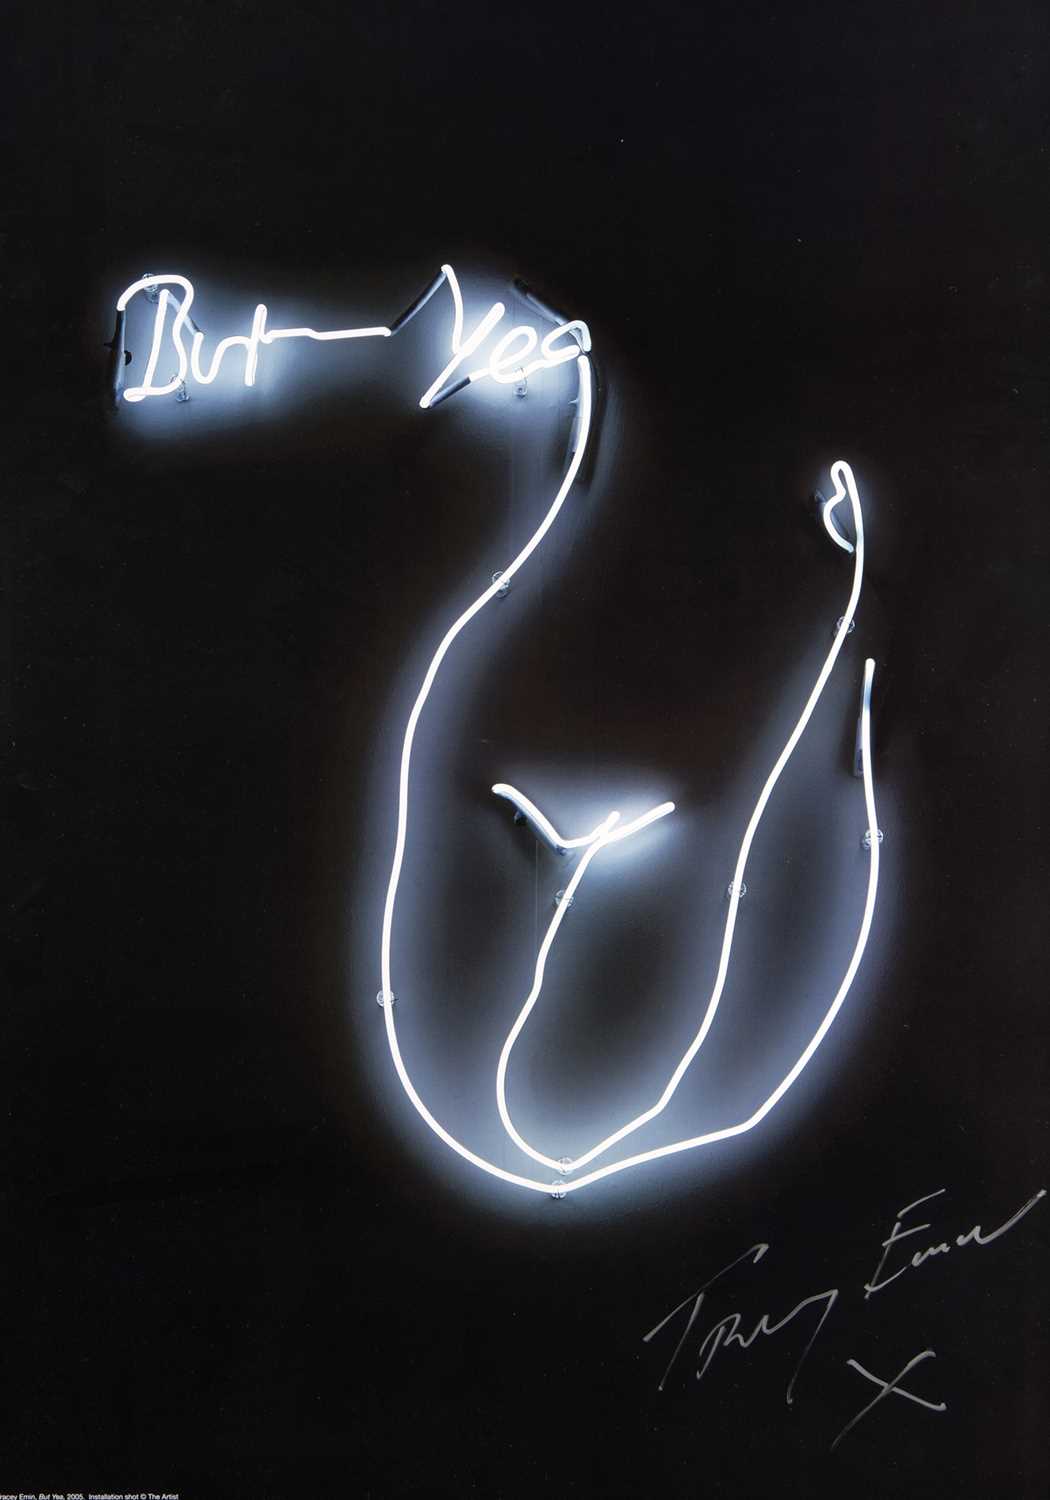 Lot 99 - Tracey Emin (British 1963-), 'But Yea', 2015